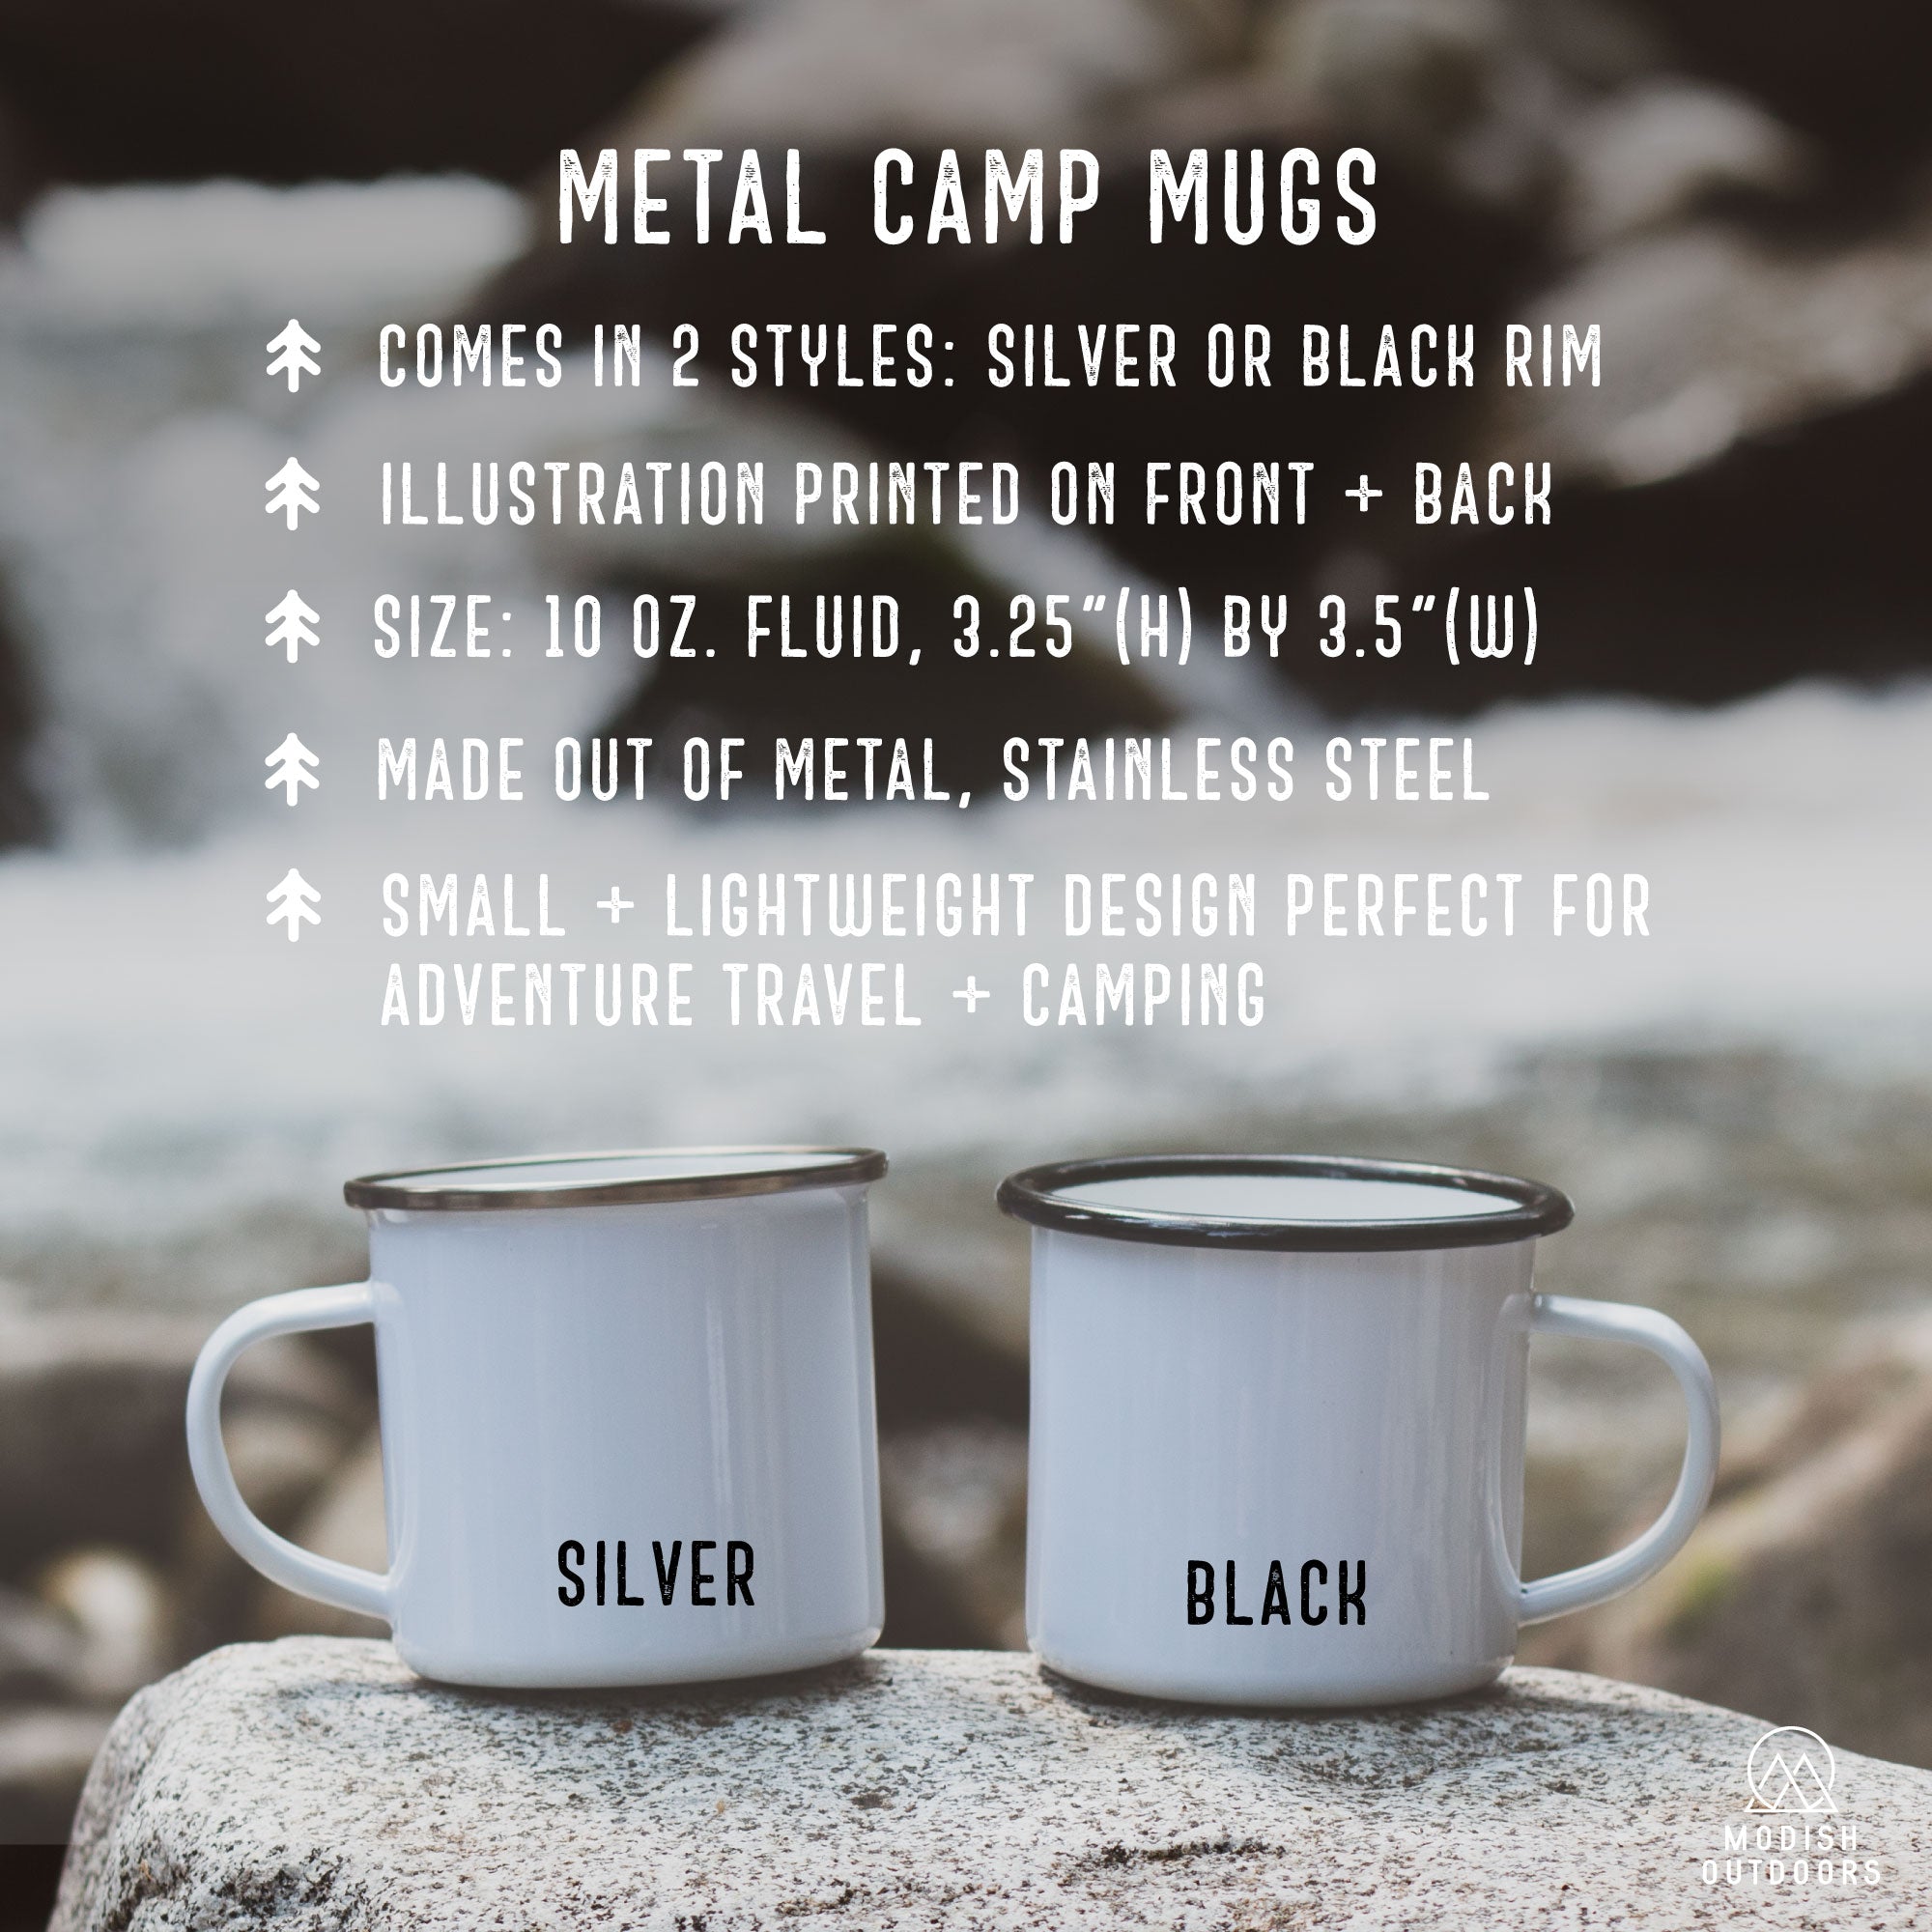 RV Motorhome + Twilight Campfire Personalized Camp Mug (4669175660597)